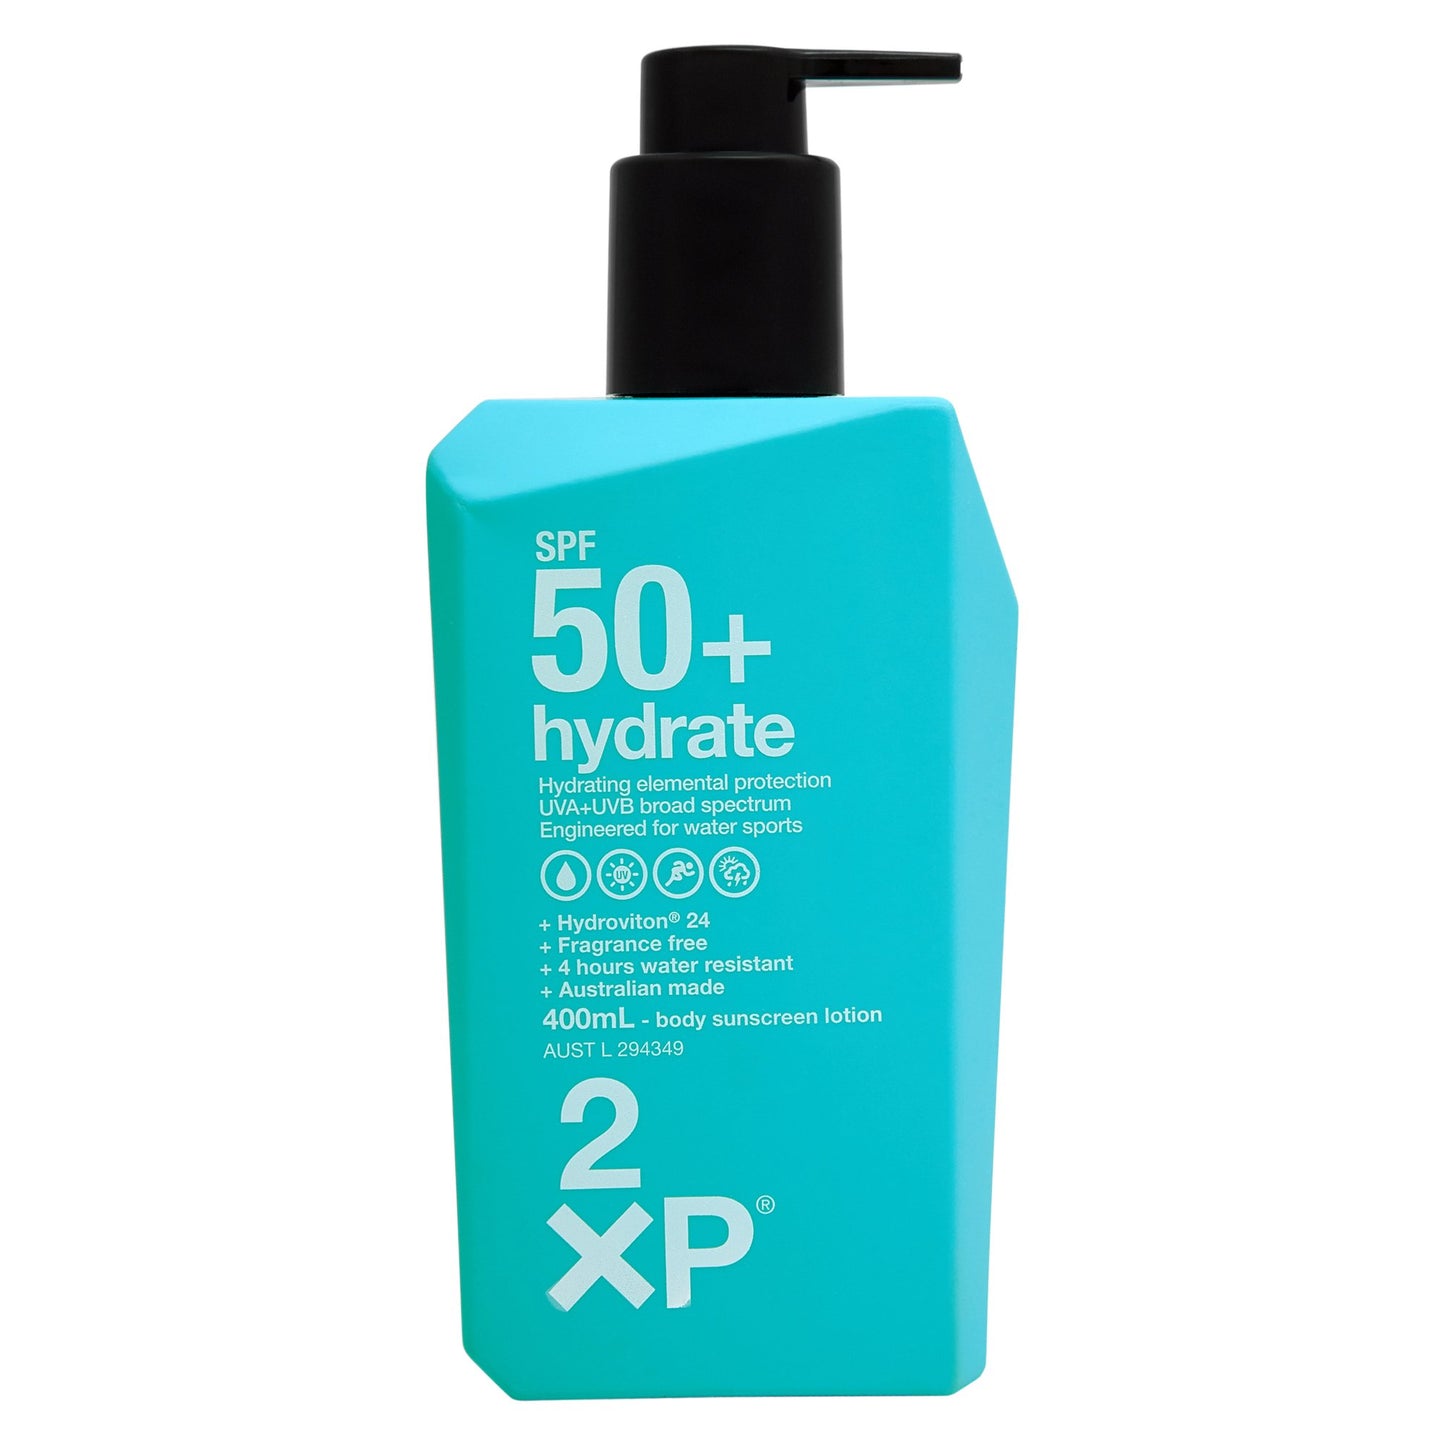 2XP hydrate 400ml